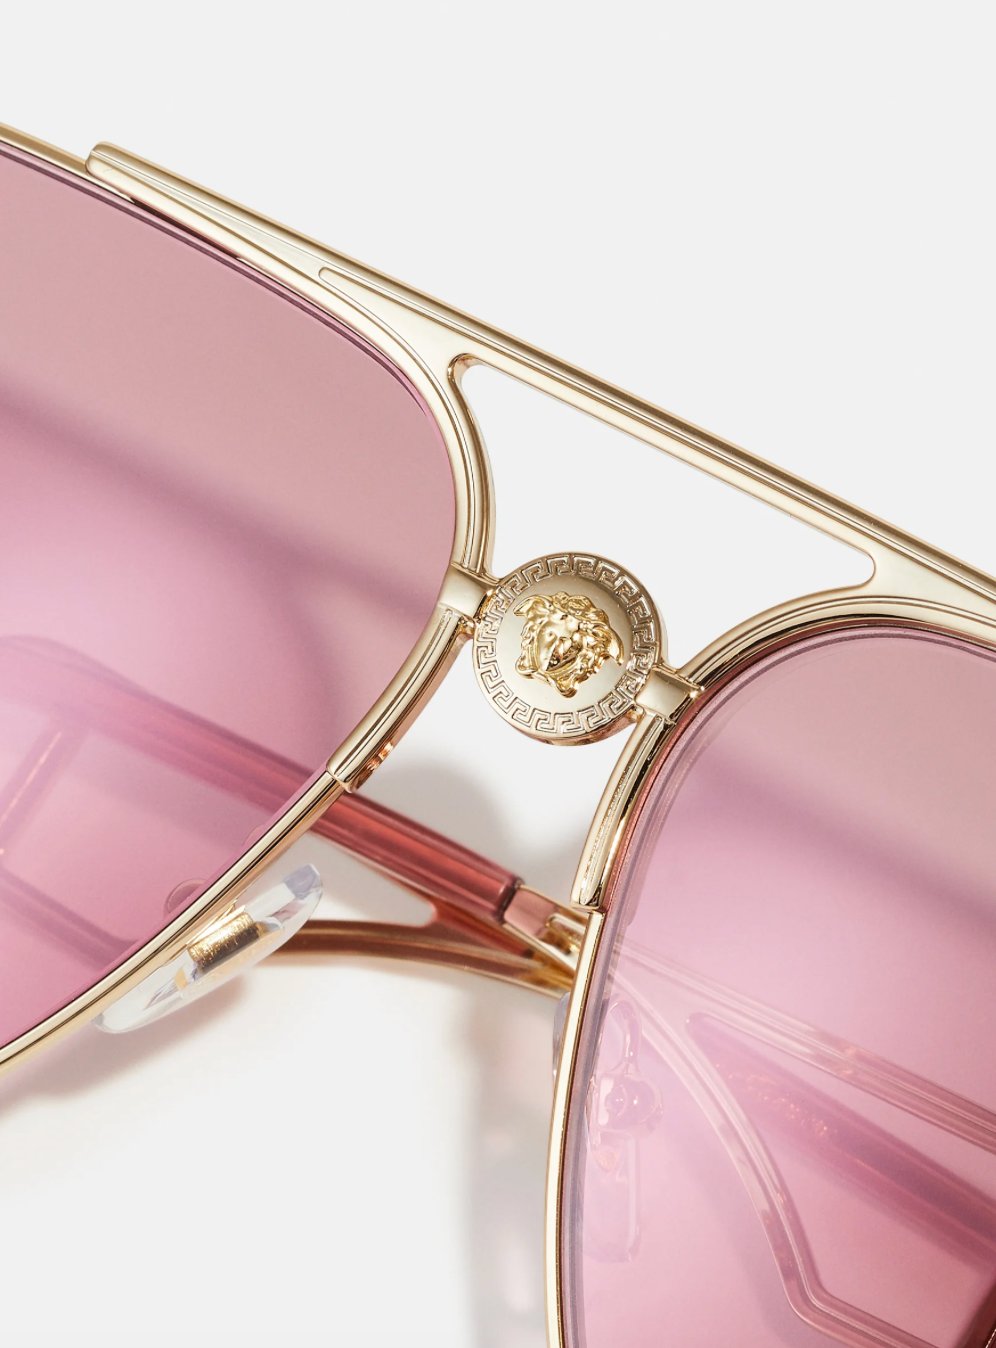 Versace 0VE2255-1002A4 63mm New Sunglasses